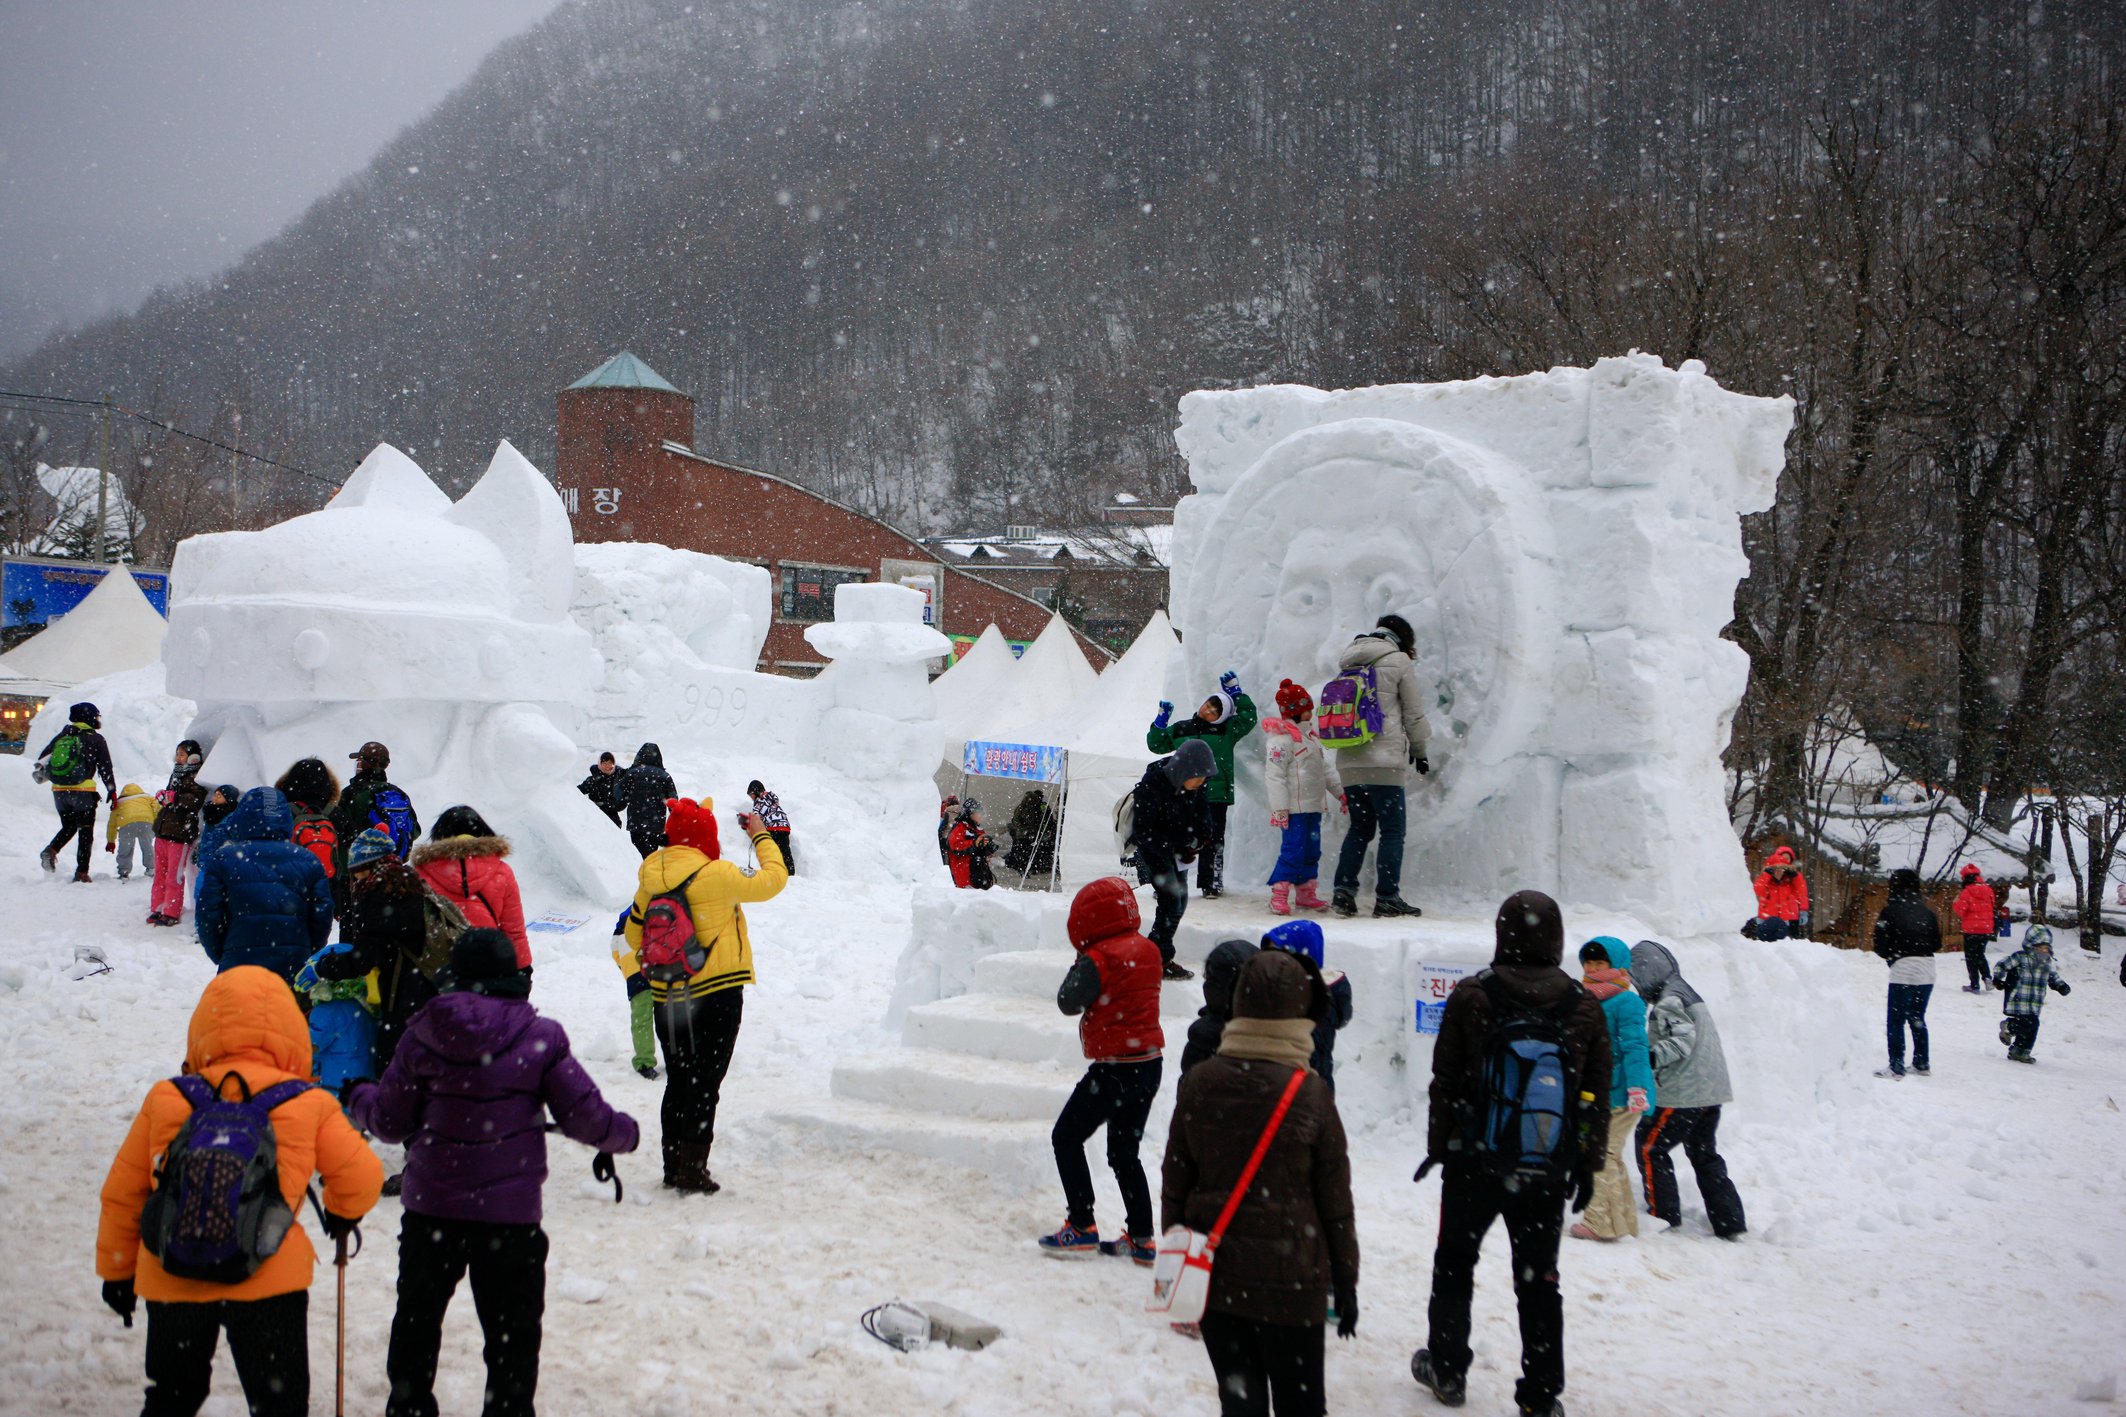 Taebaek Schneefestival